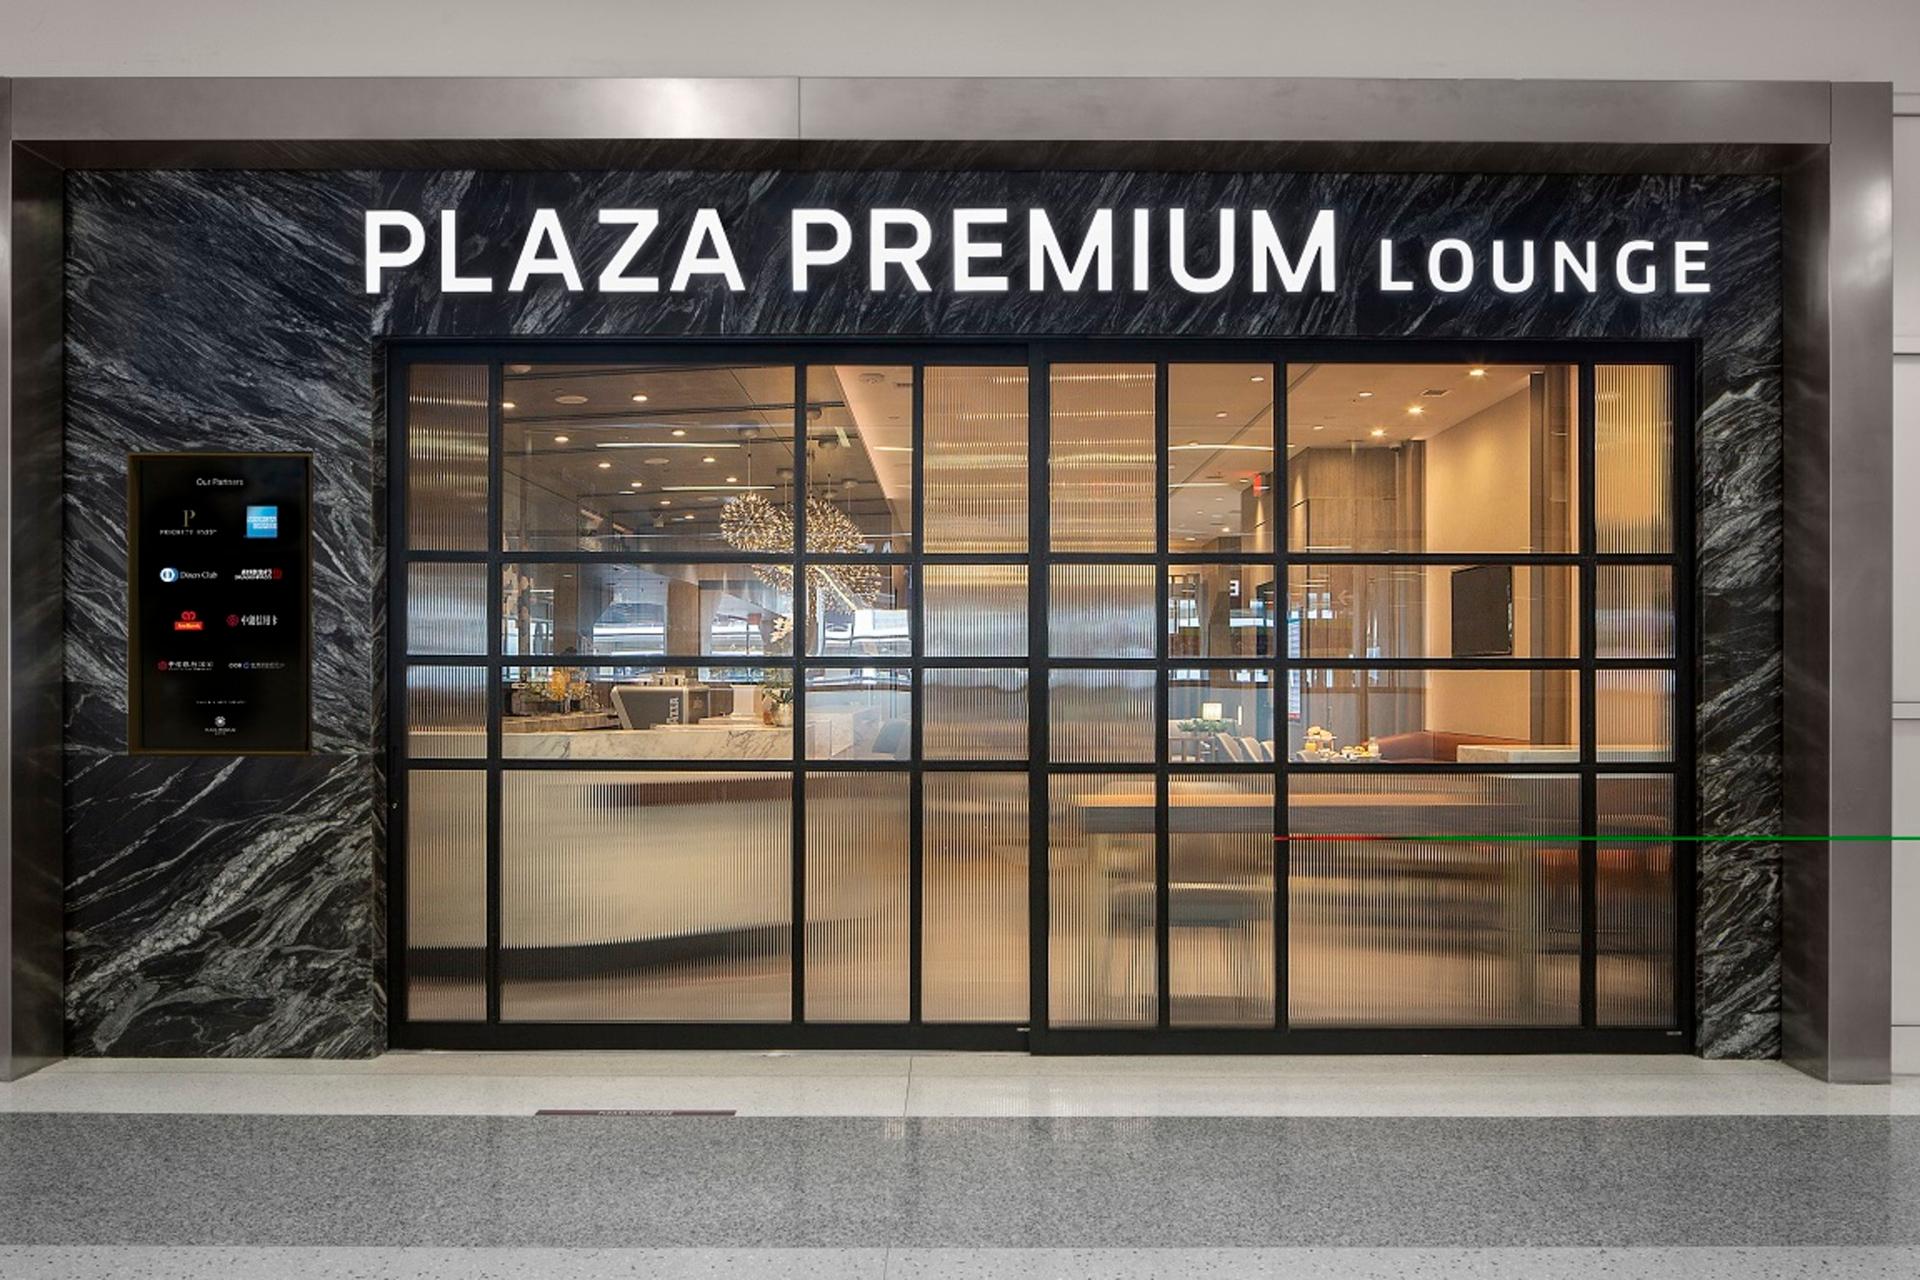 Plaza Premium Lounge image 1 of 17